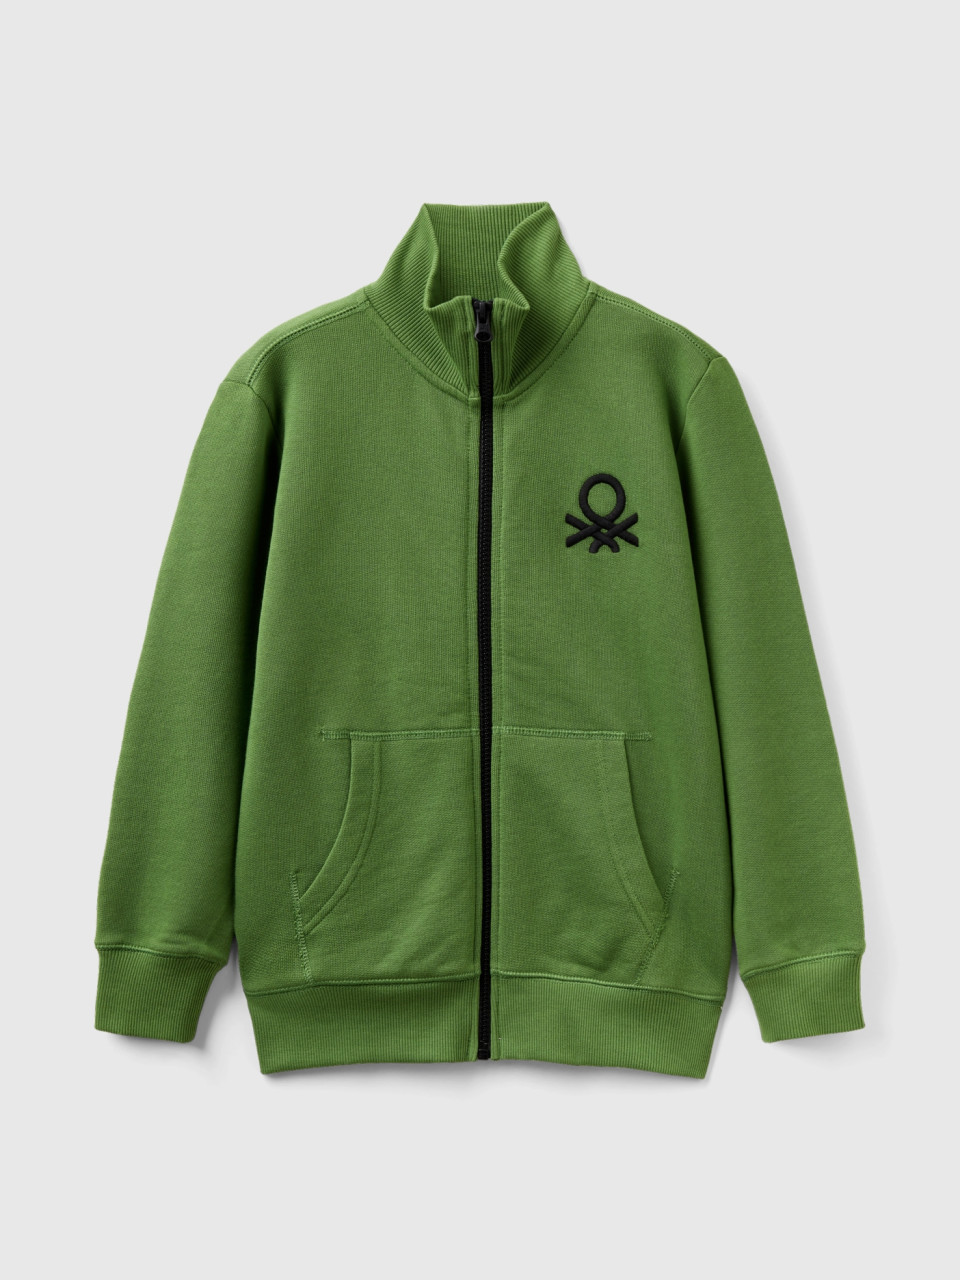 Benetton, Pure Cotton Sweatshirt With Zipper, Military Green, Kids